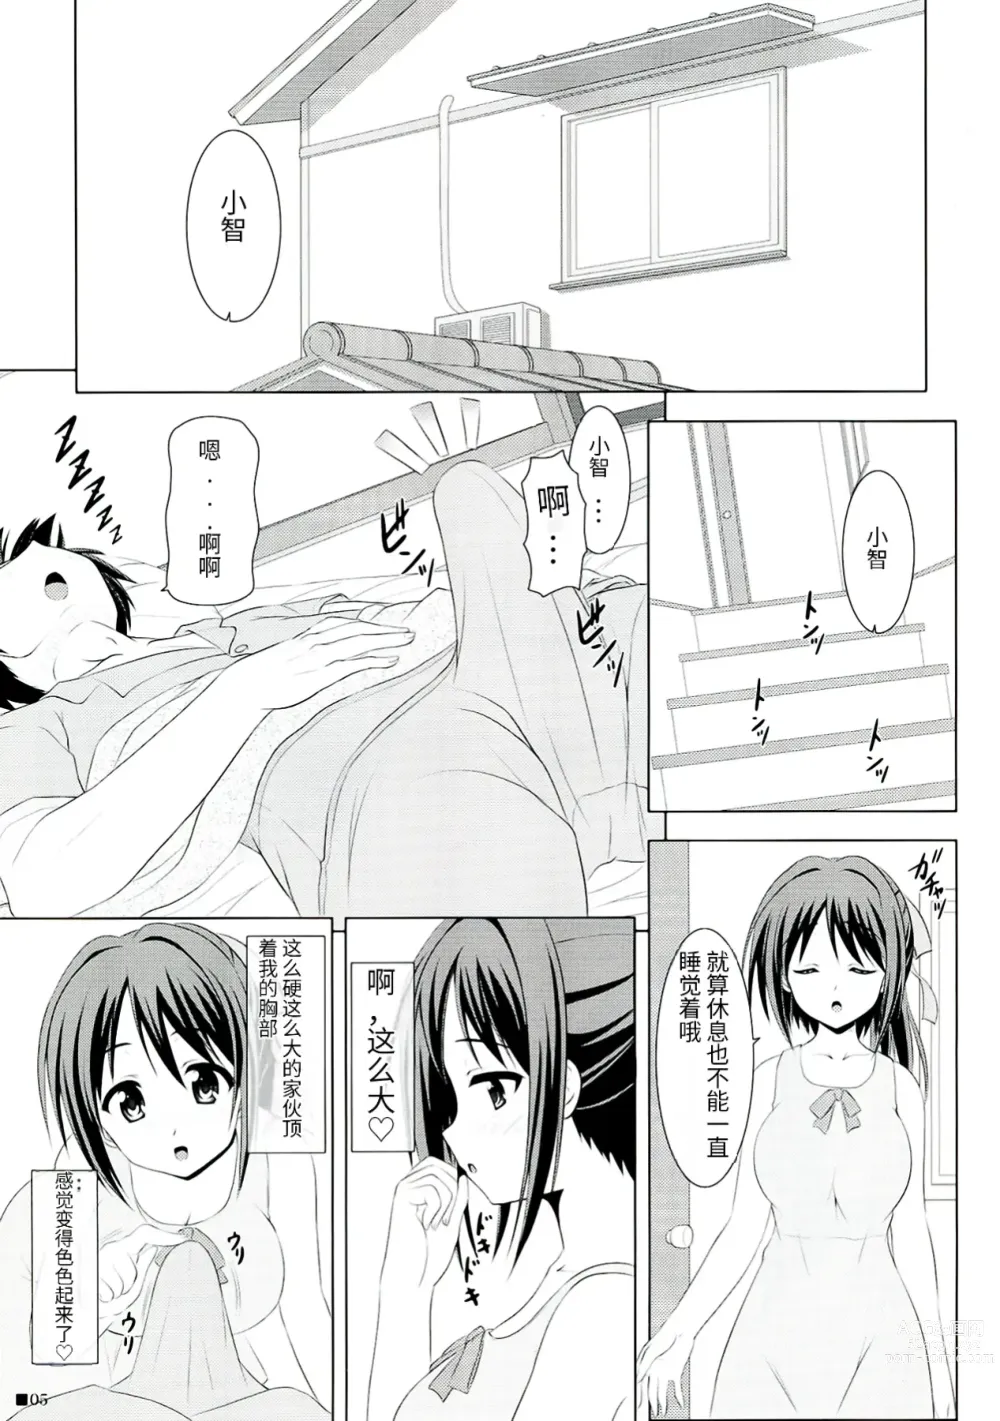 Page 5 of doujinshi Soraotobon